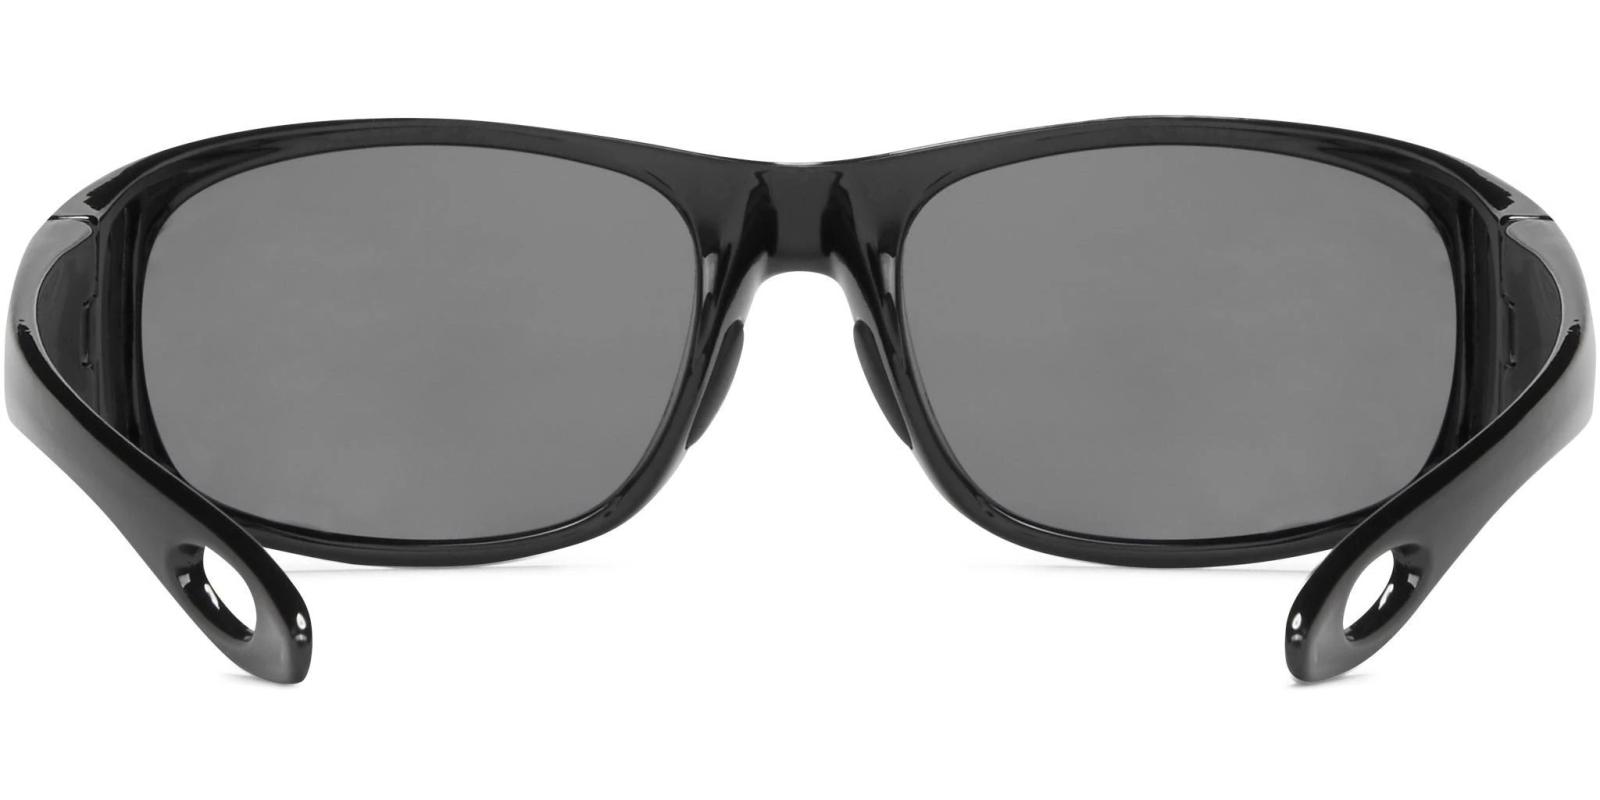 icu Eyewear Grander Sunglasses